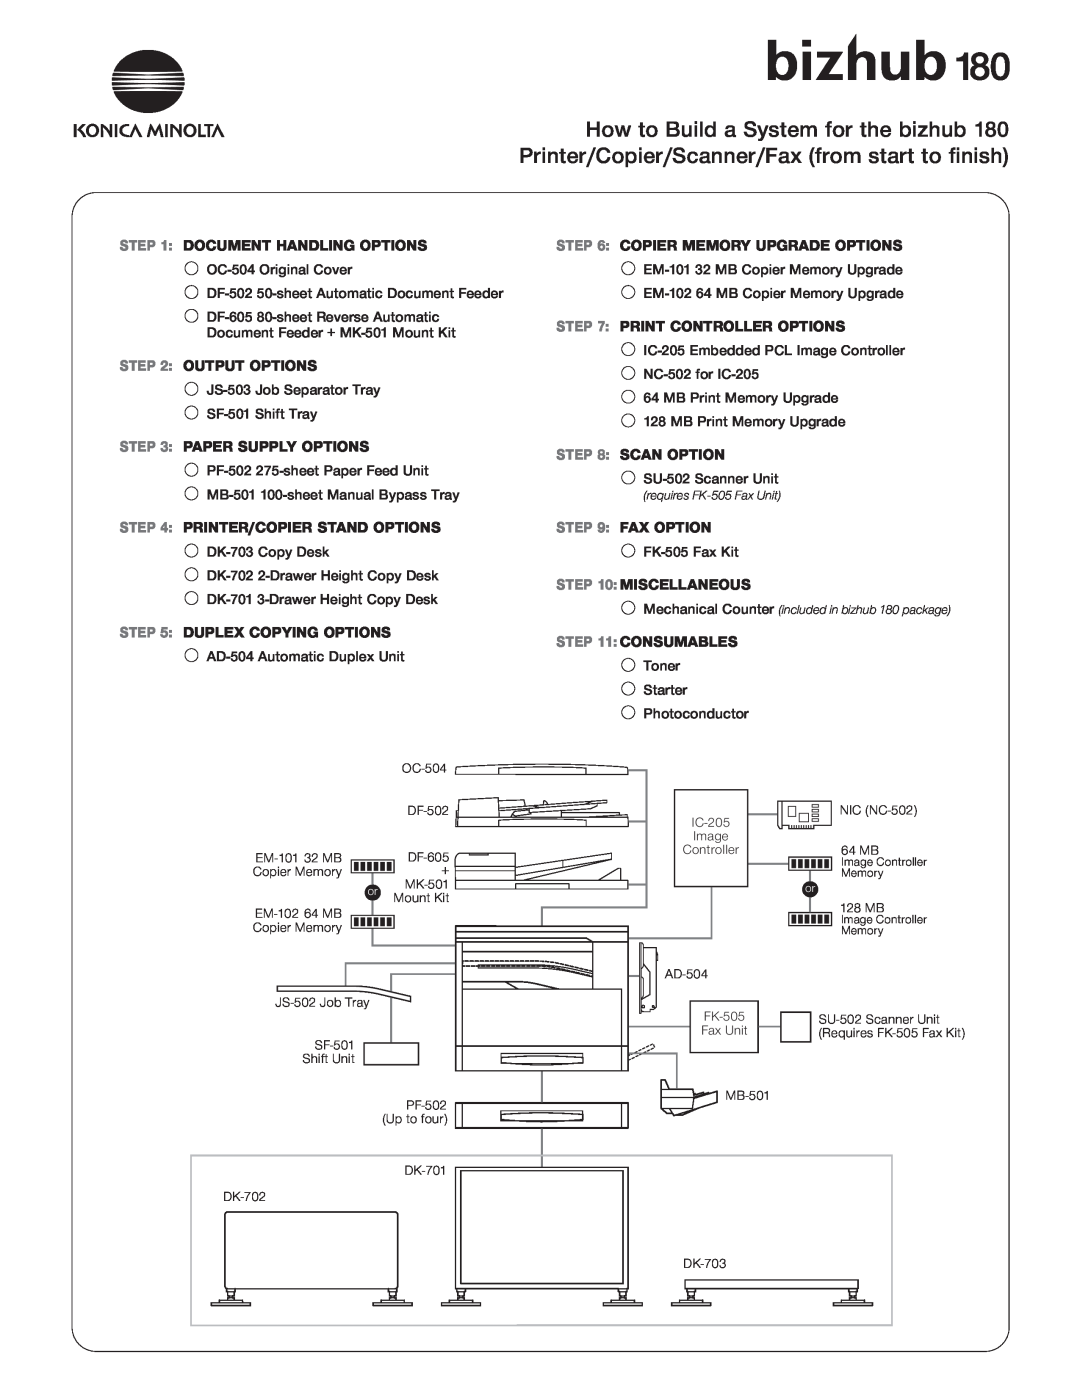 Konica Minolta 180 manual Document Handling Options 